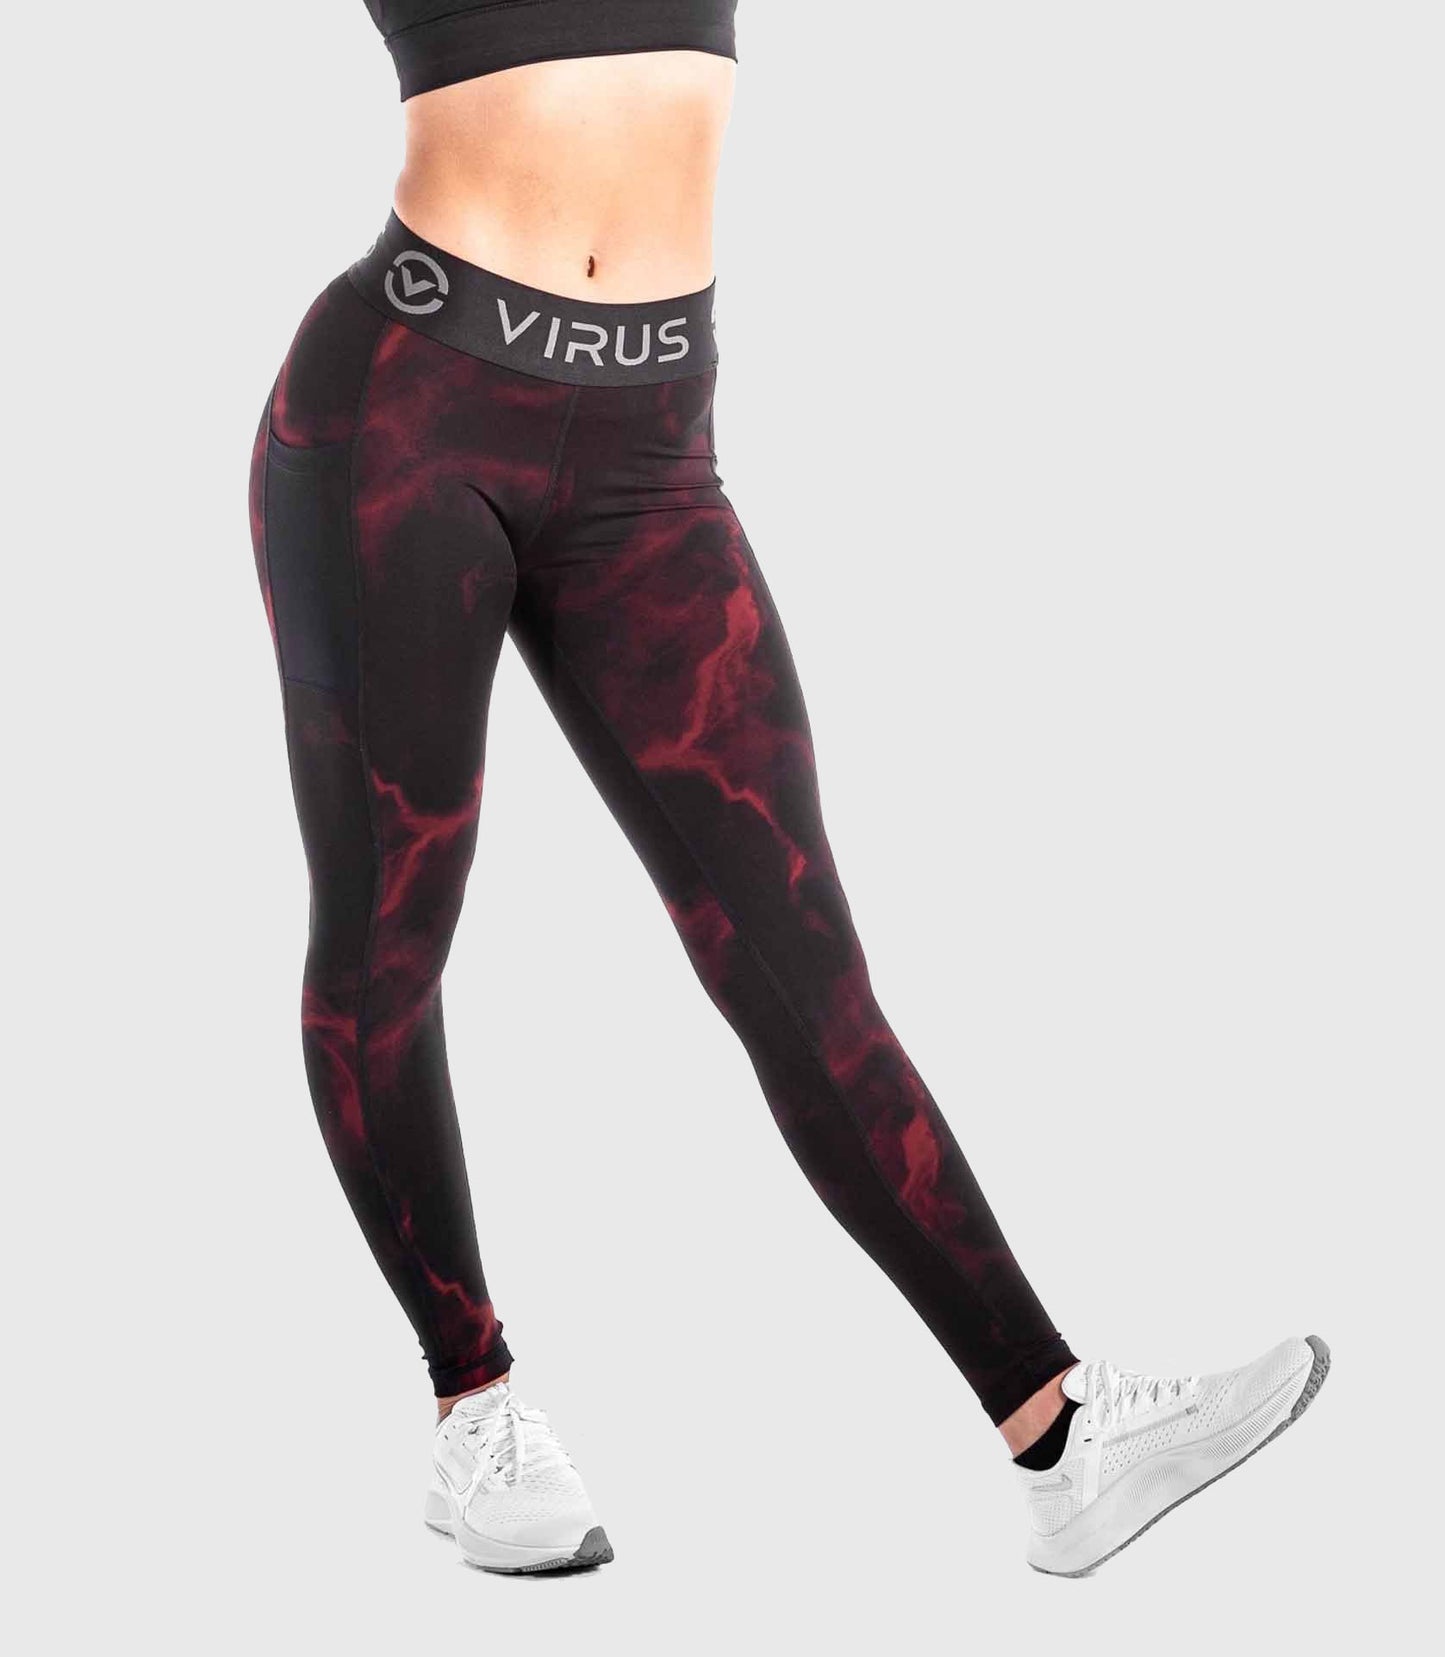 Virus Women's Vanity Pants